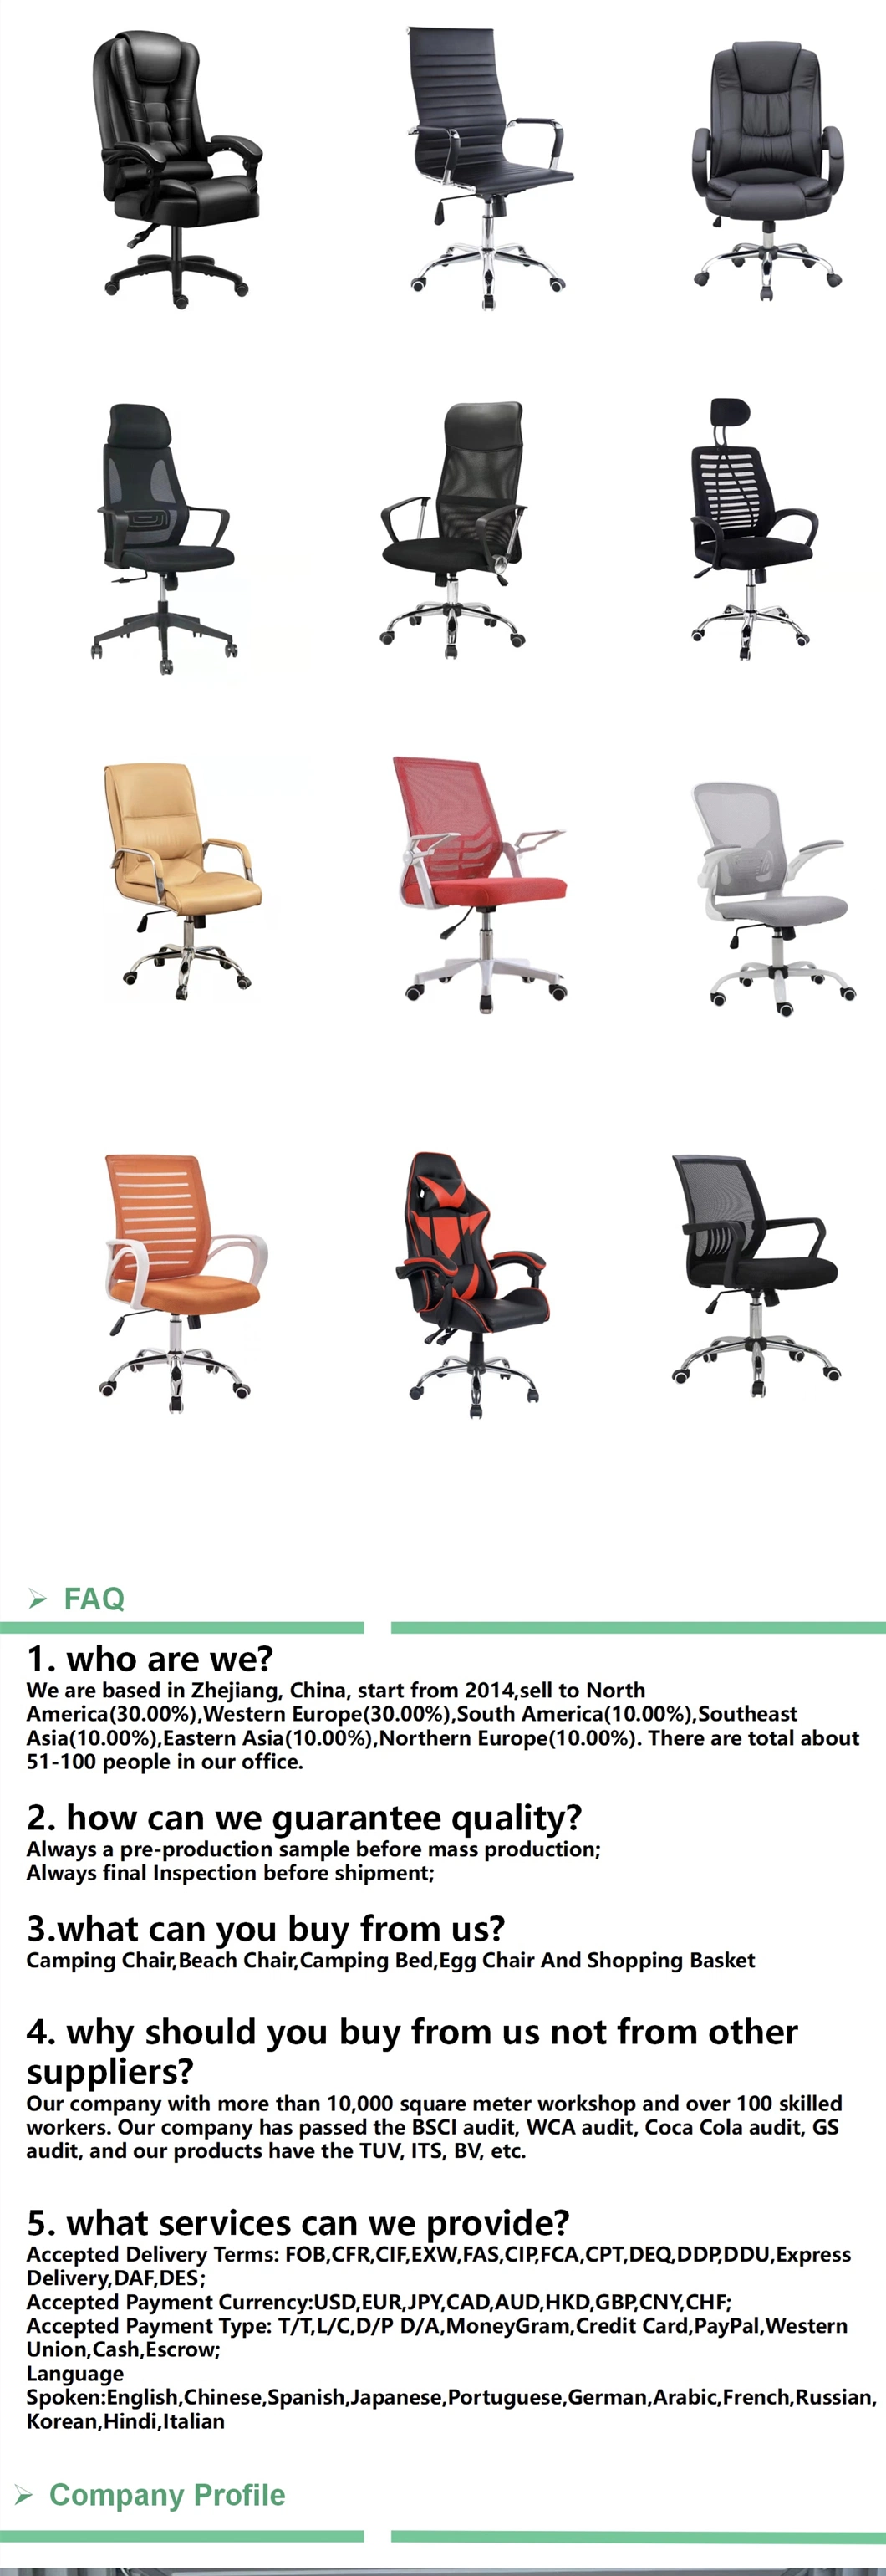 Adjustable Fabric Executive Ergonomic Mesh Furniture Living Room Office Chair